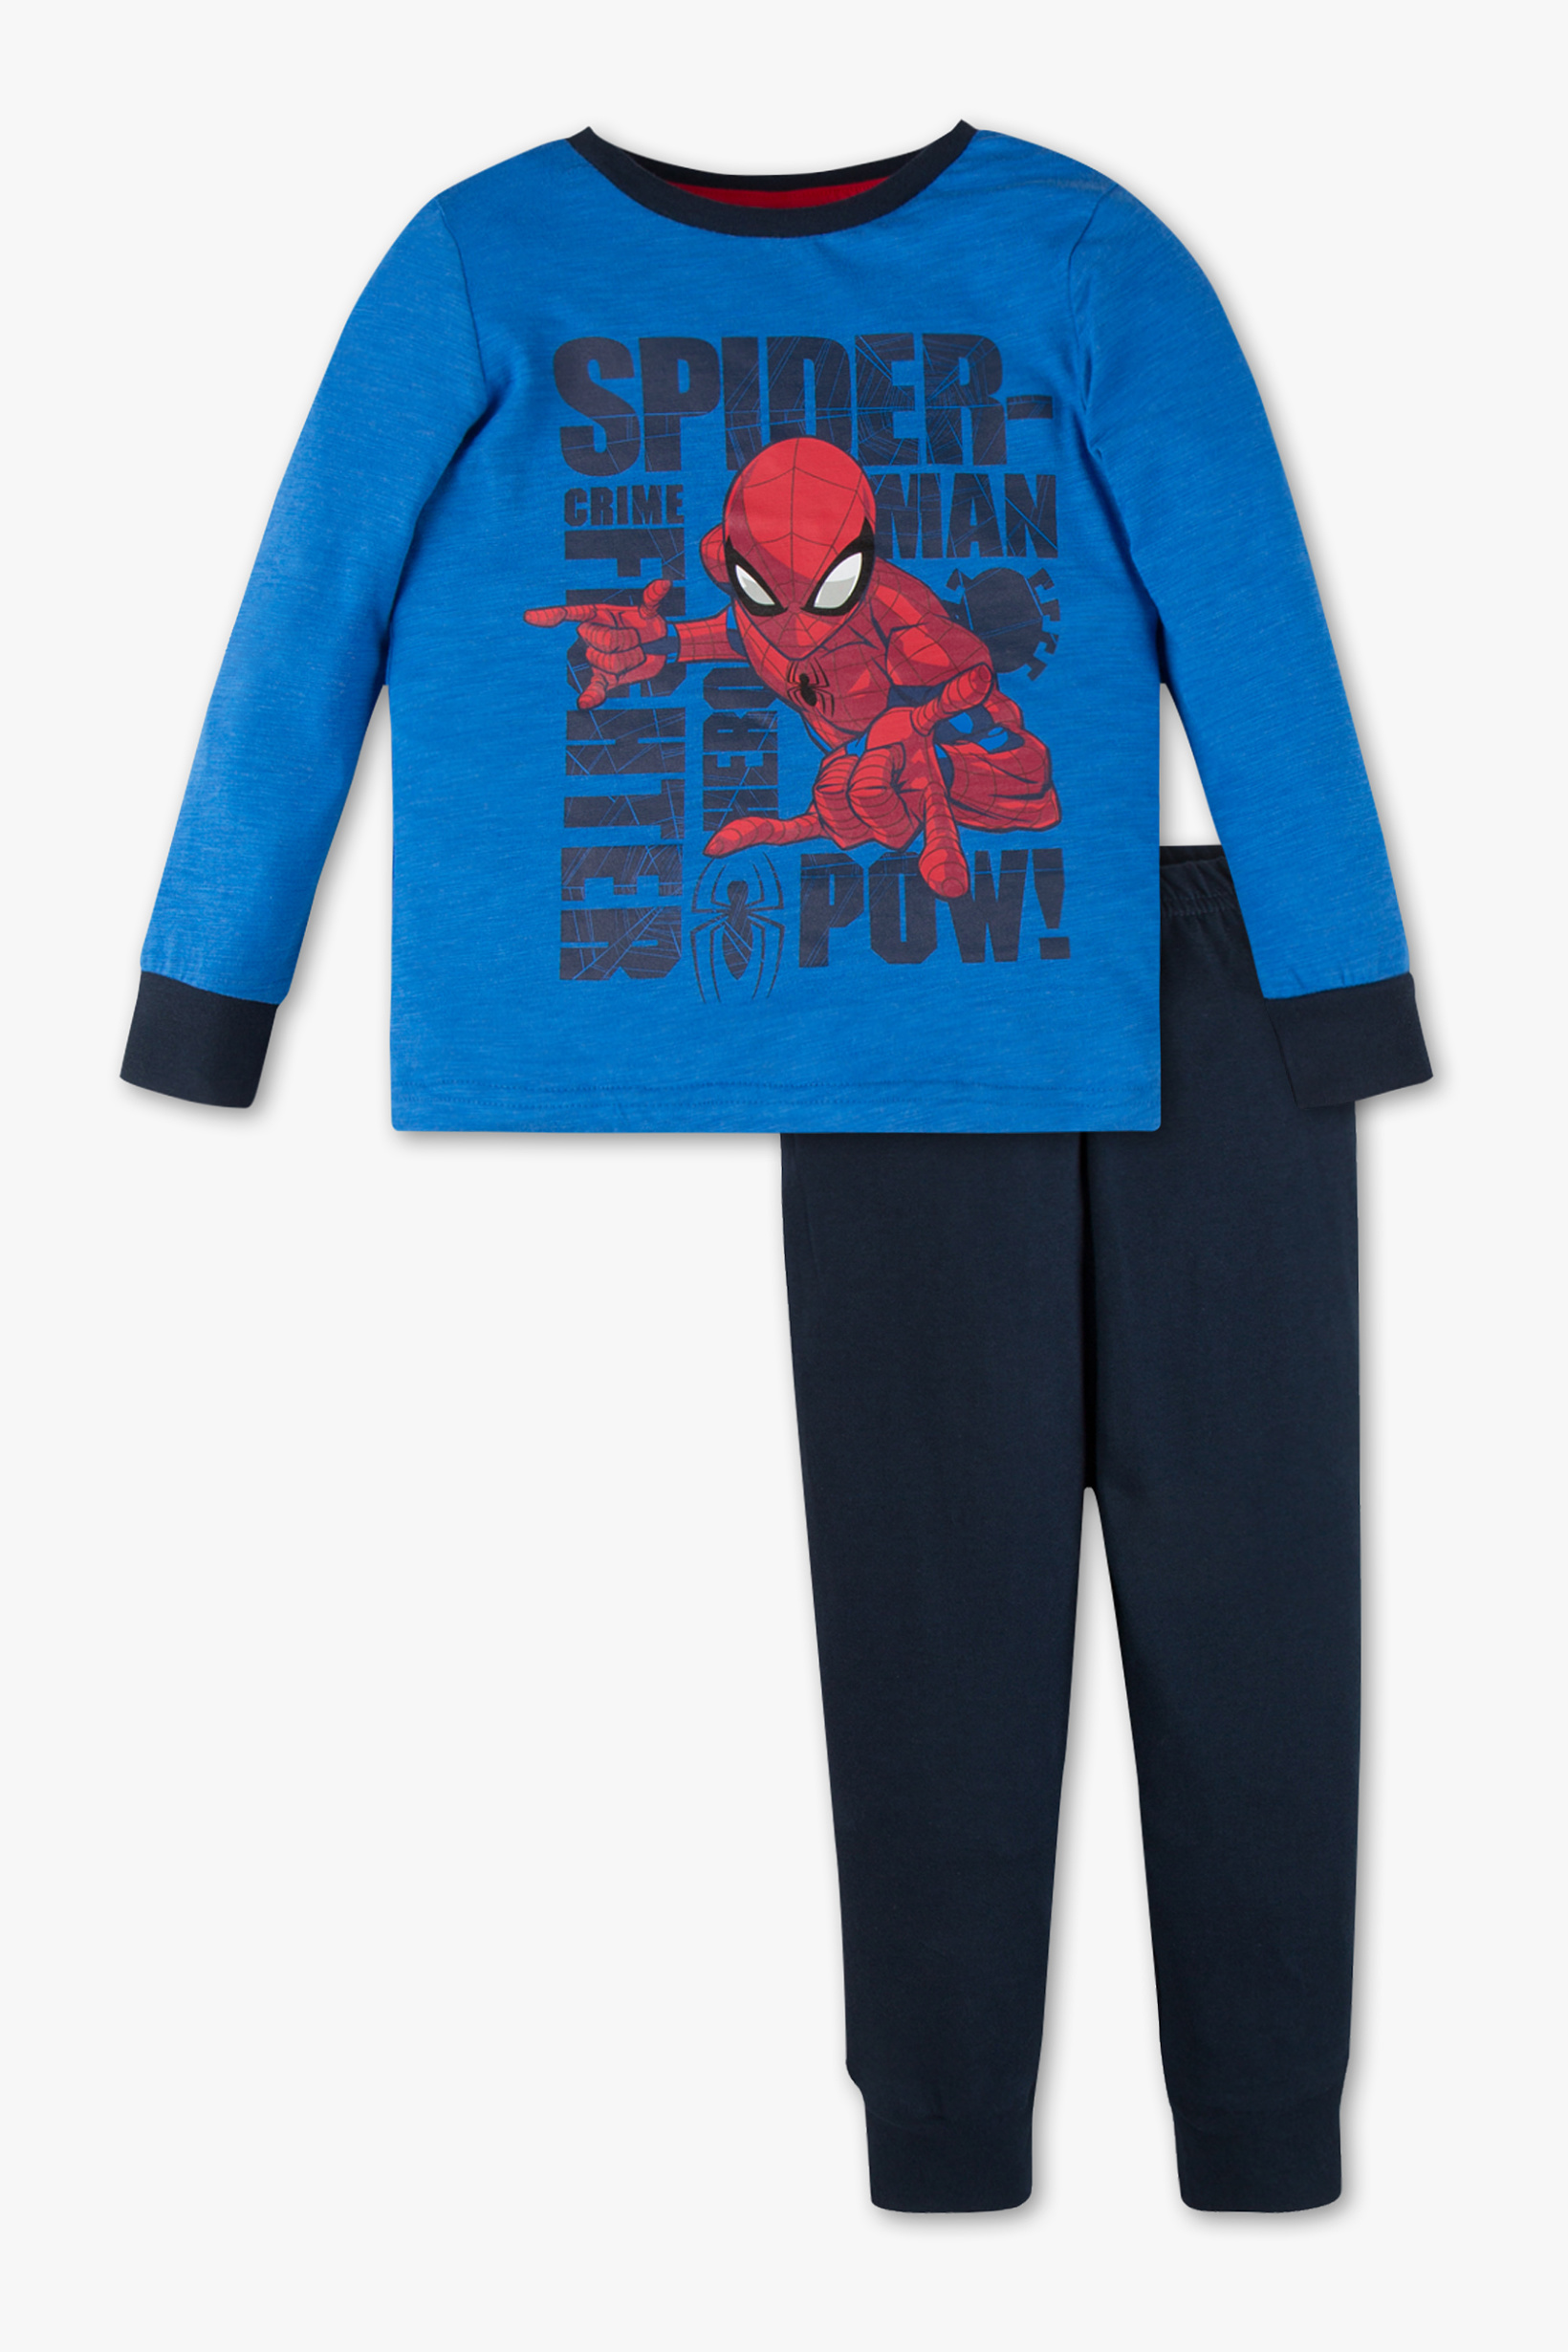 Spider-Man pyjama biokatoen 2-delig